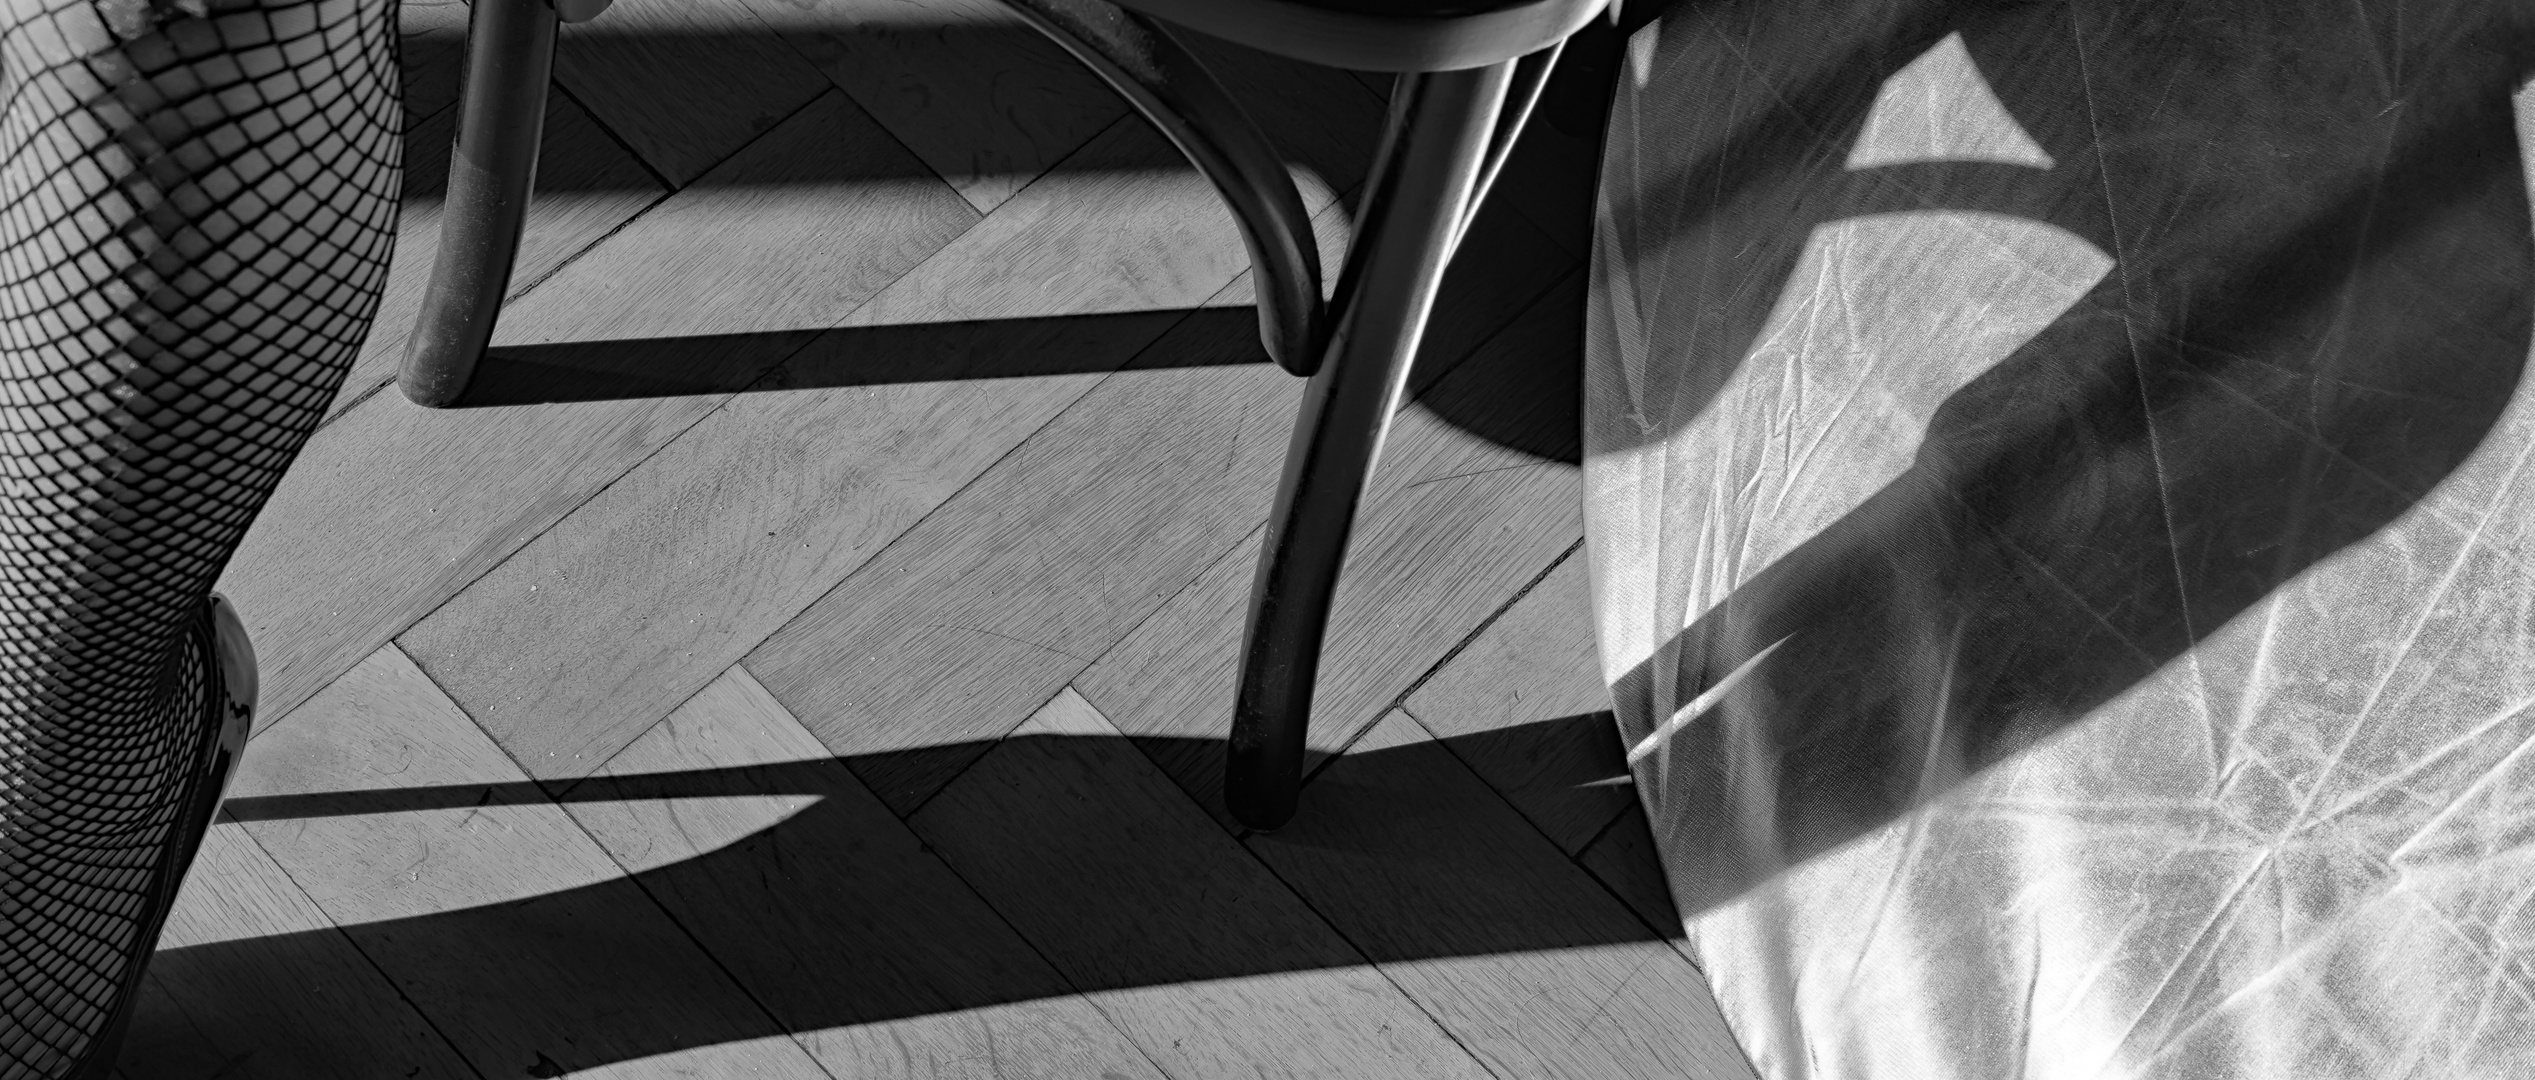 net.heel.chair & shadows